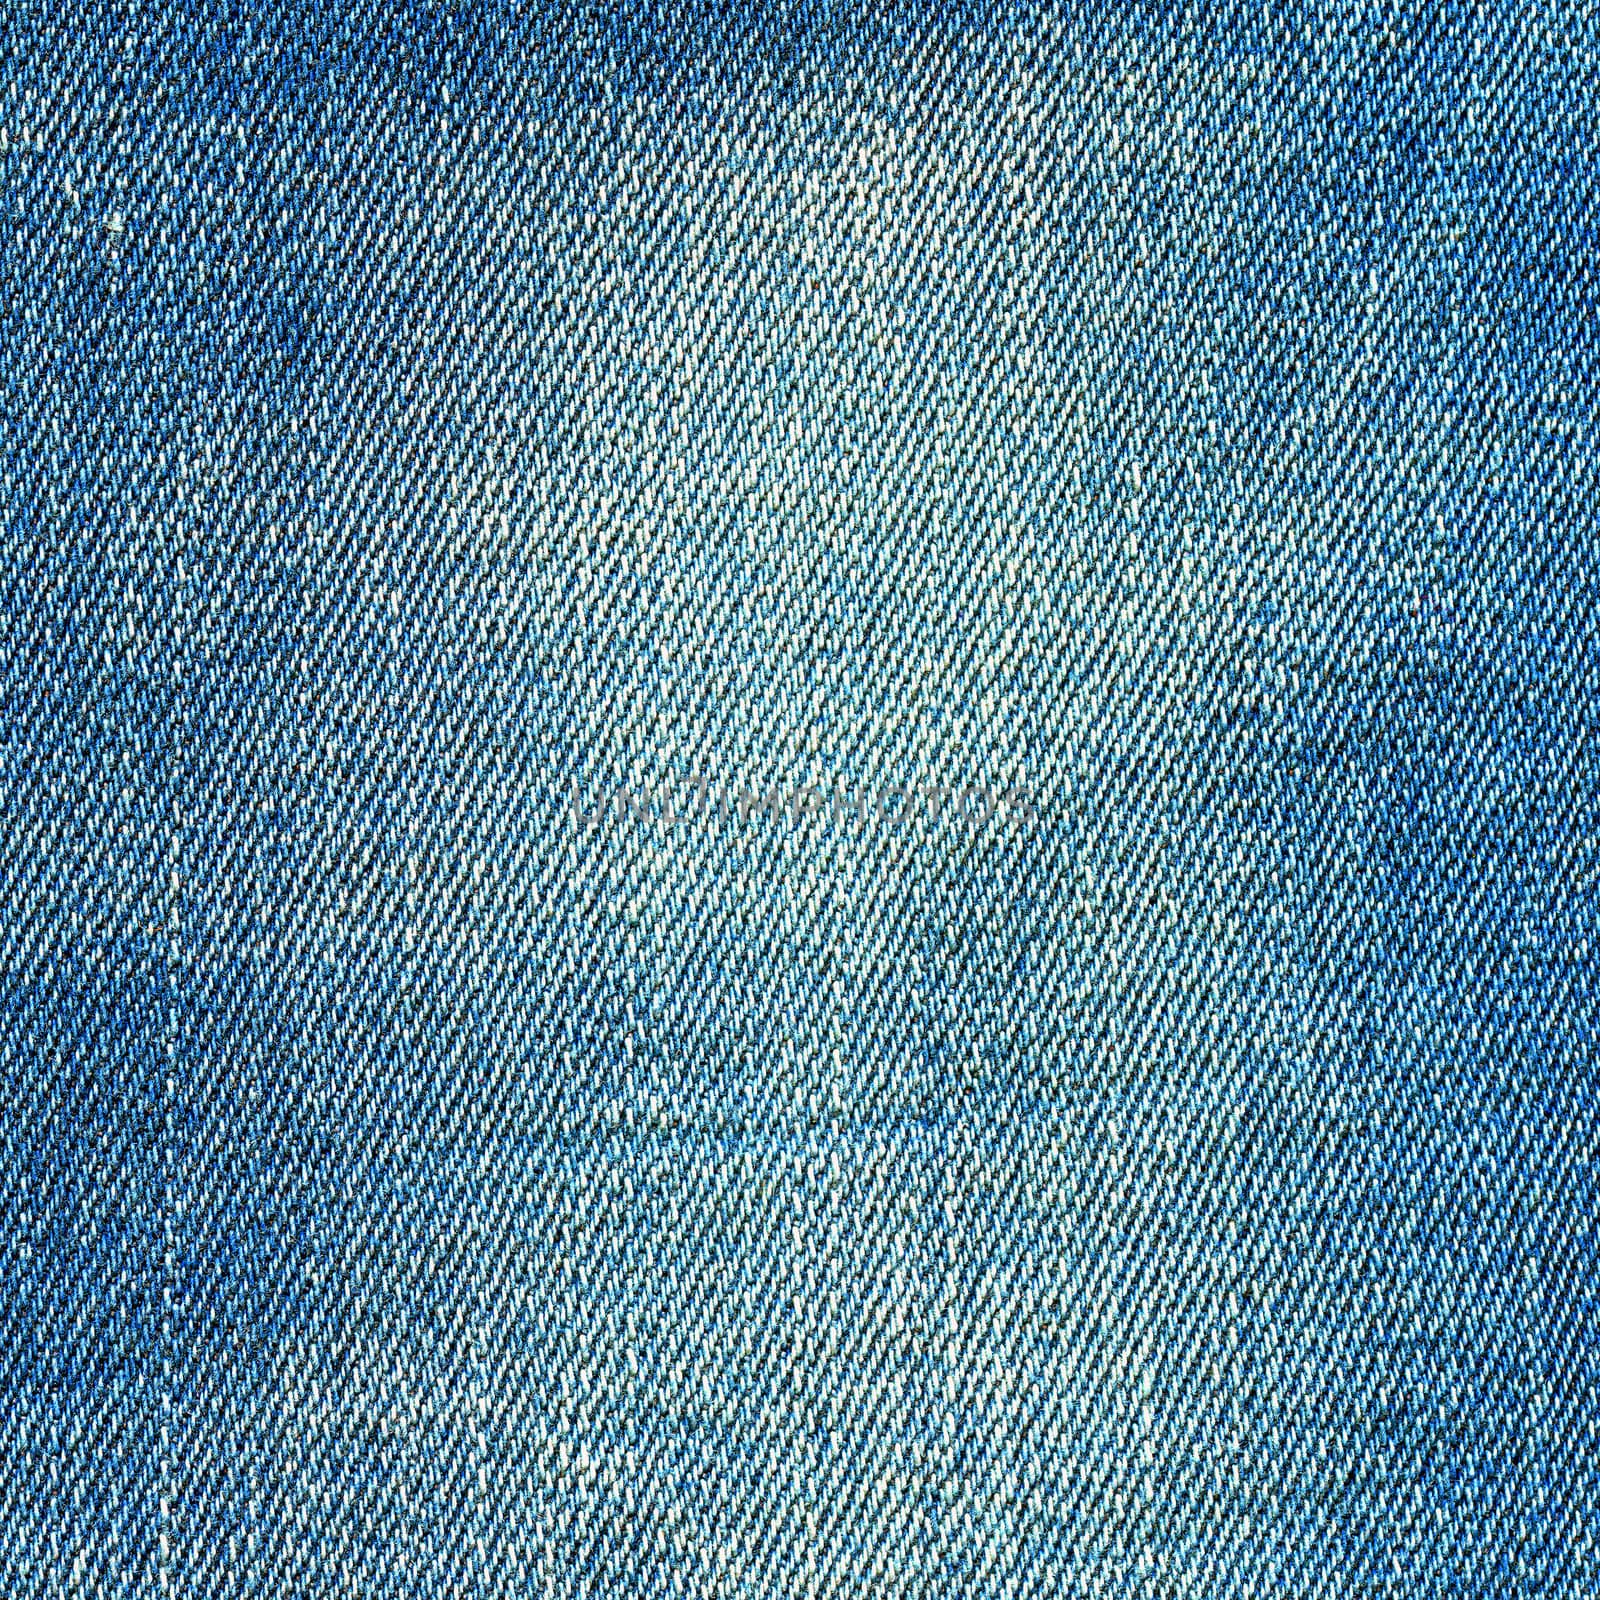 Denim texture. Light blue jeans vintage background